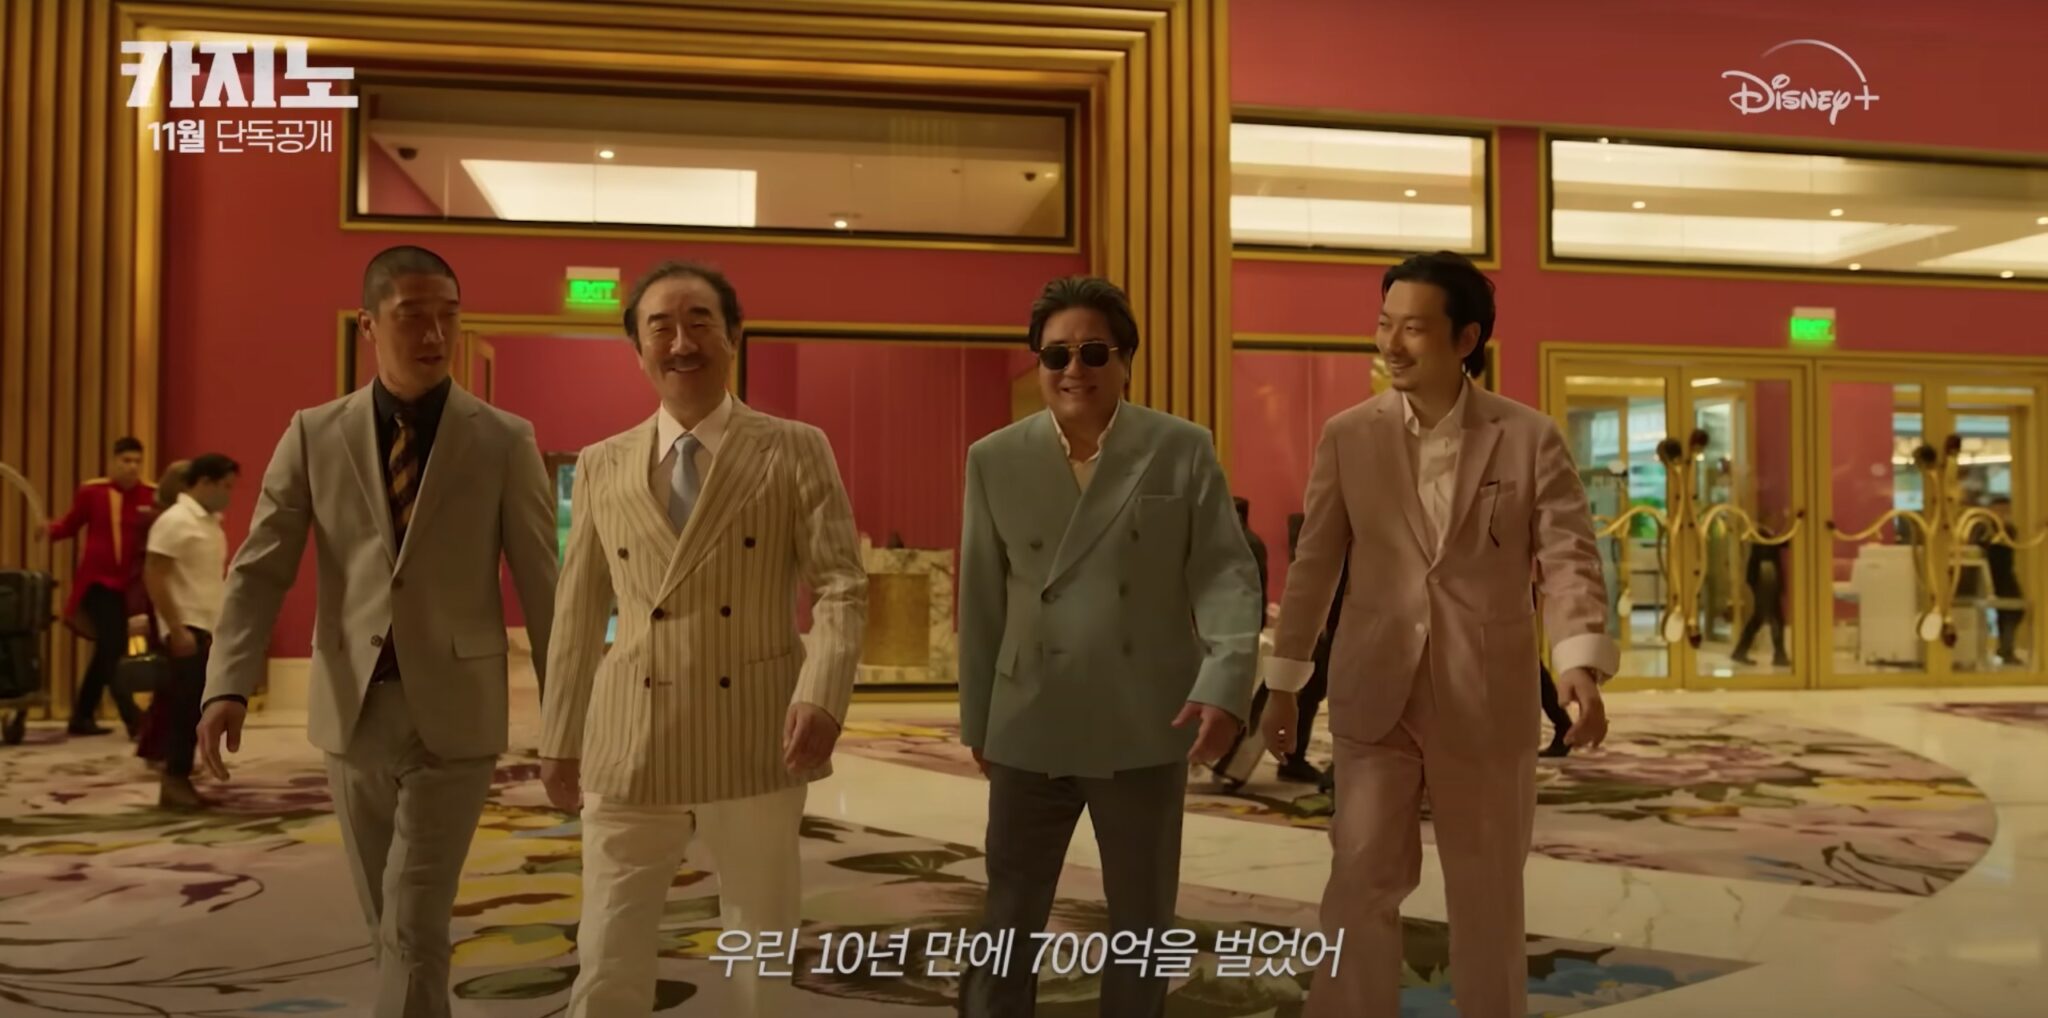 Choi Min-shik takes a gamble on himself in Disney+’s Casino